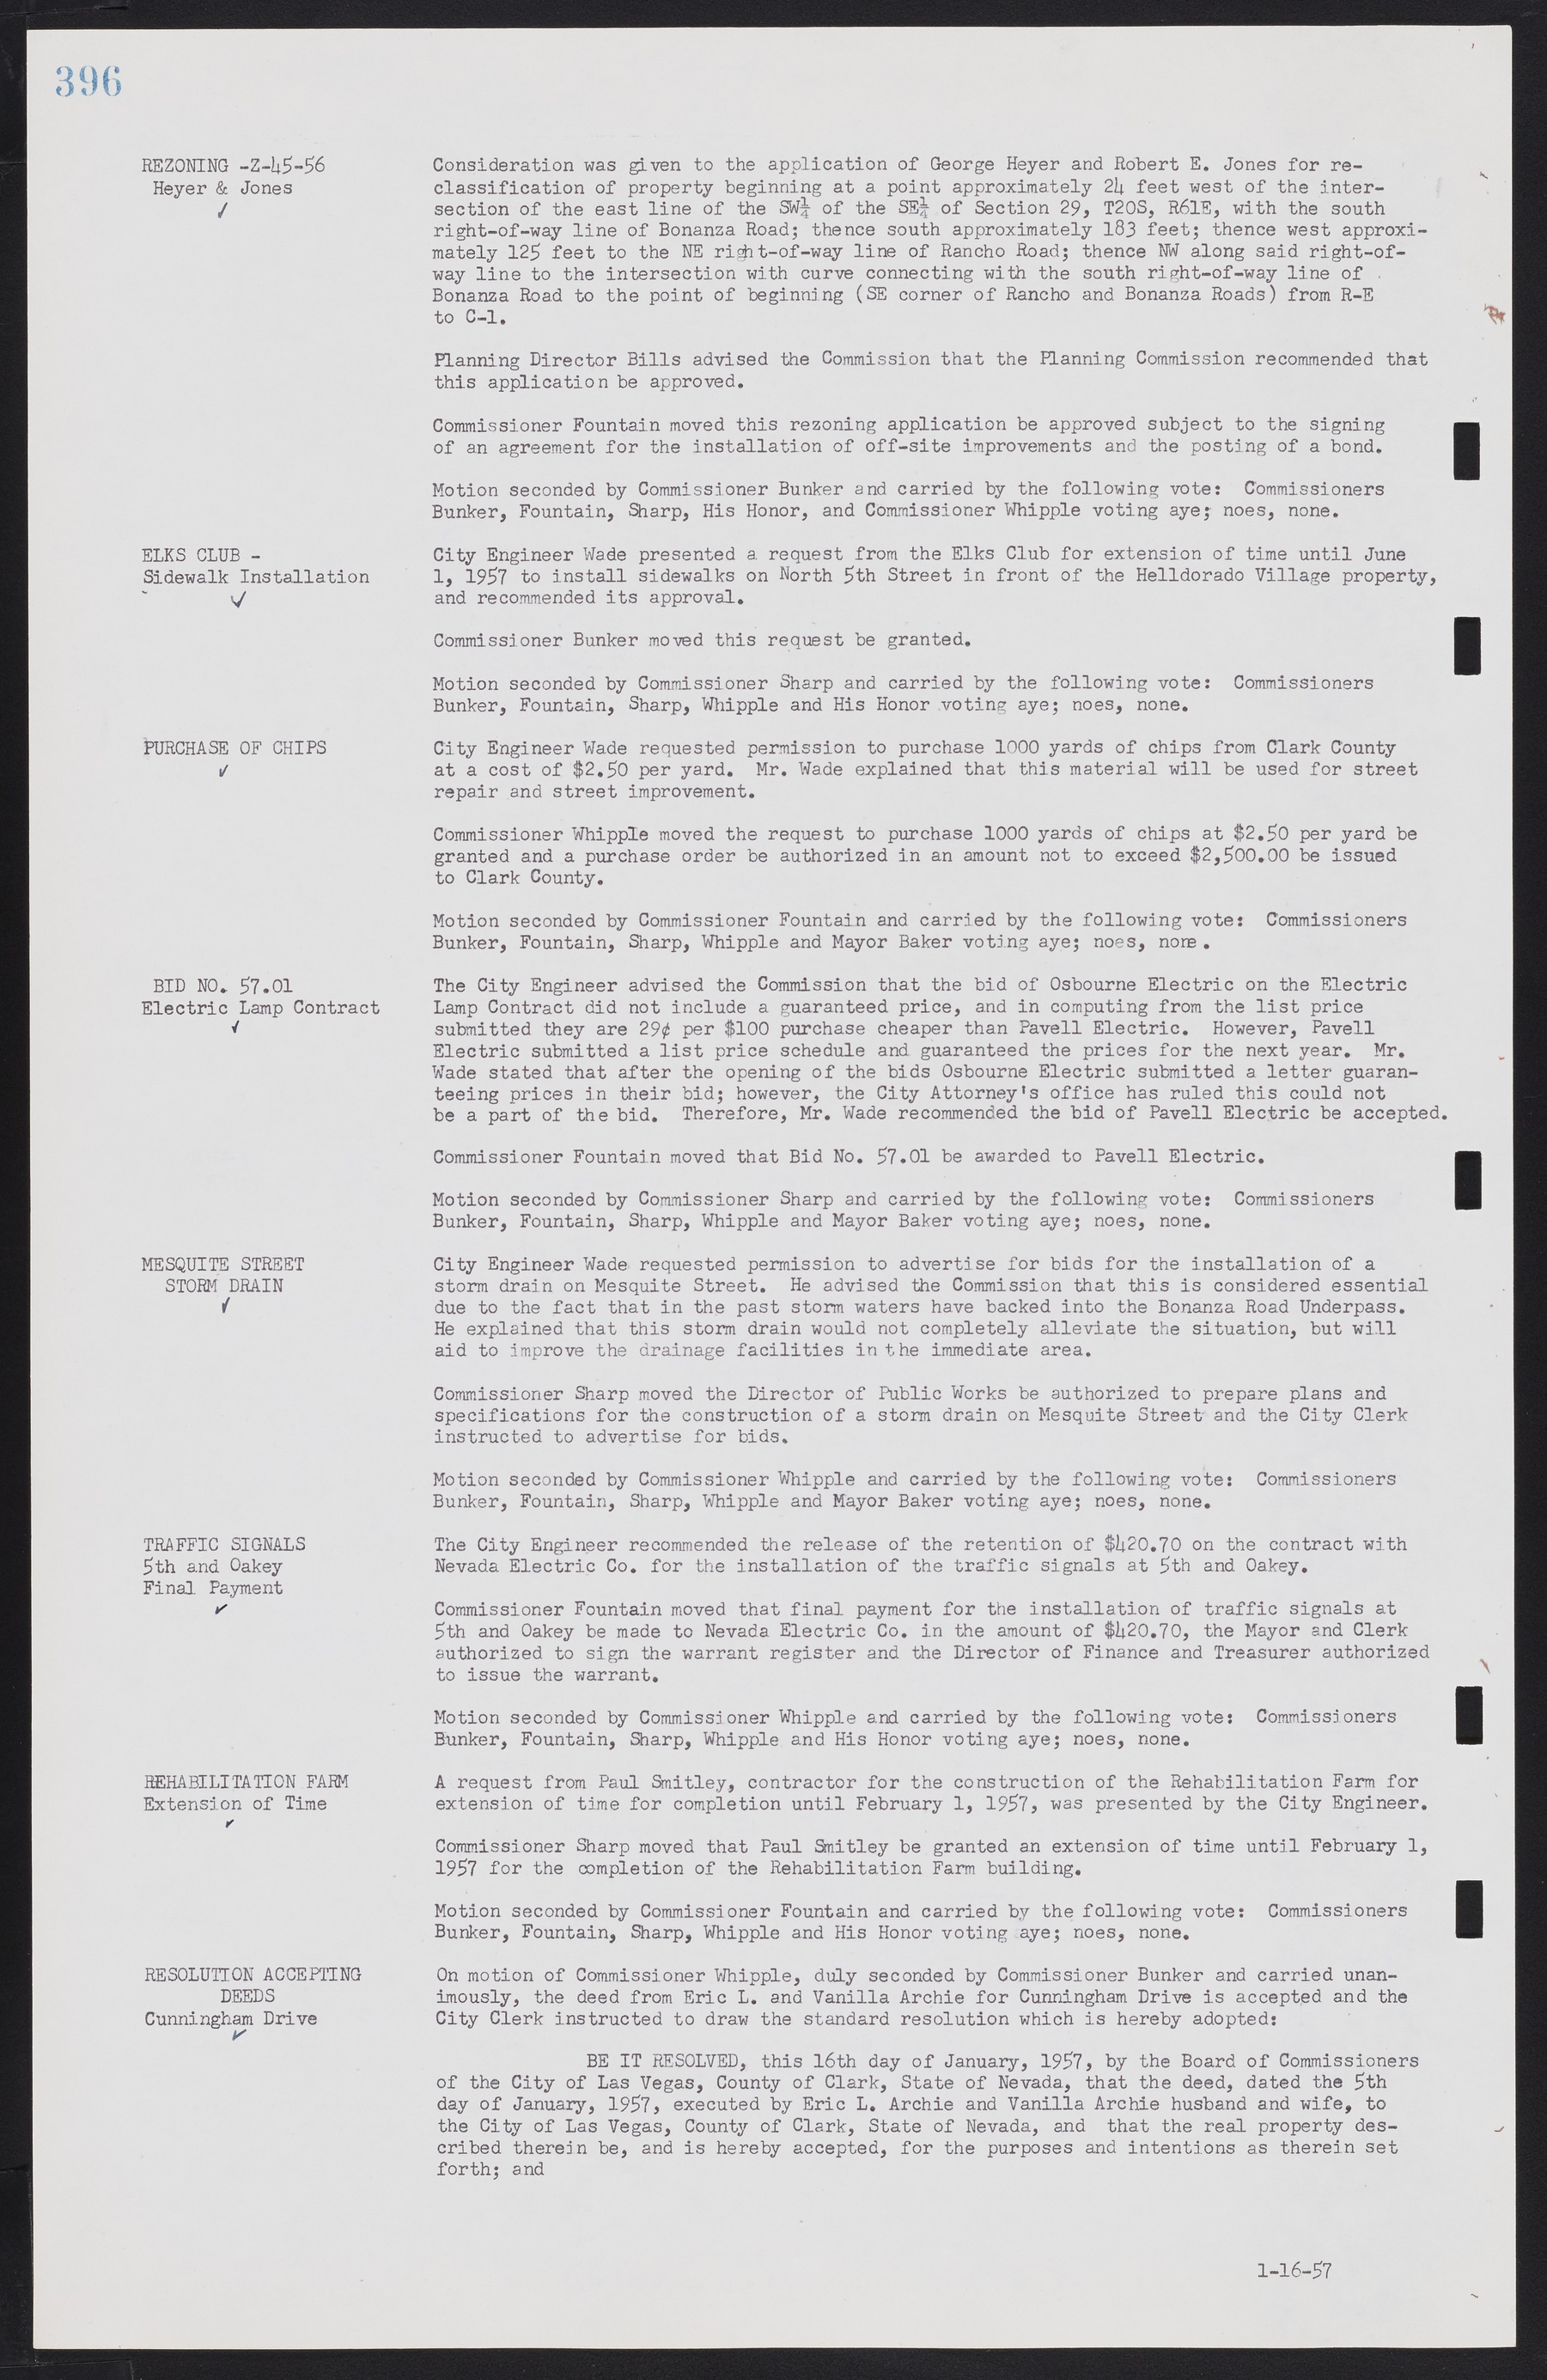 Las Vegas City Commission Minutes, September 21, 1955 to November 20, 1957, lvc000010-416